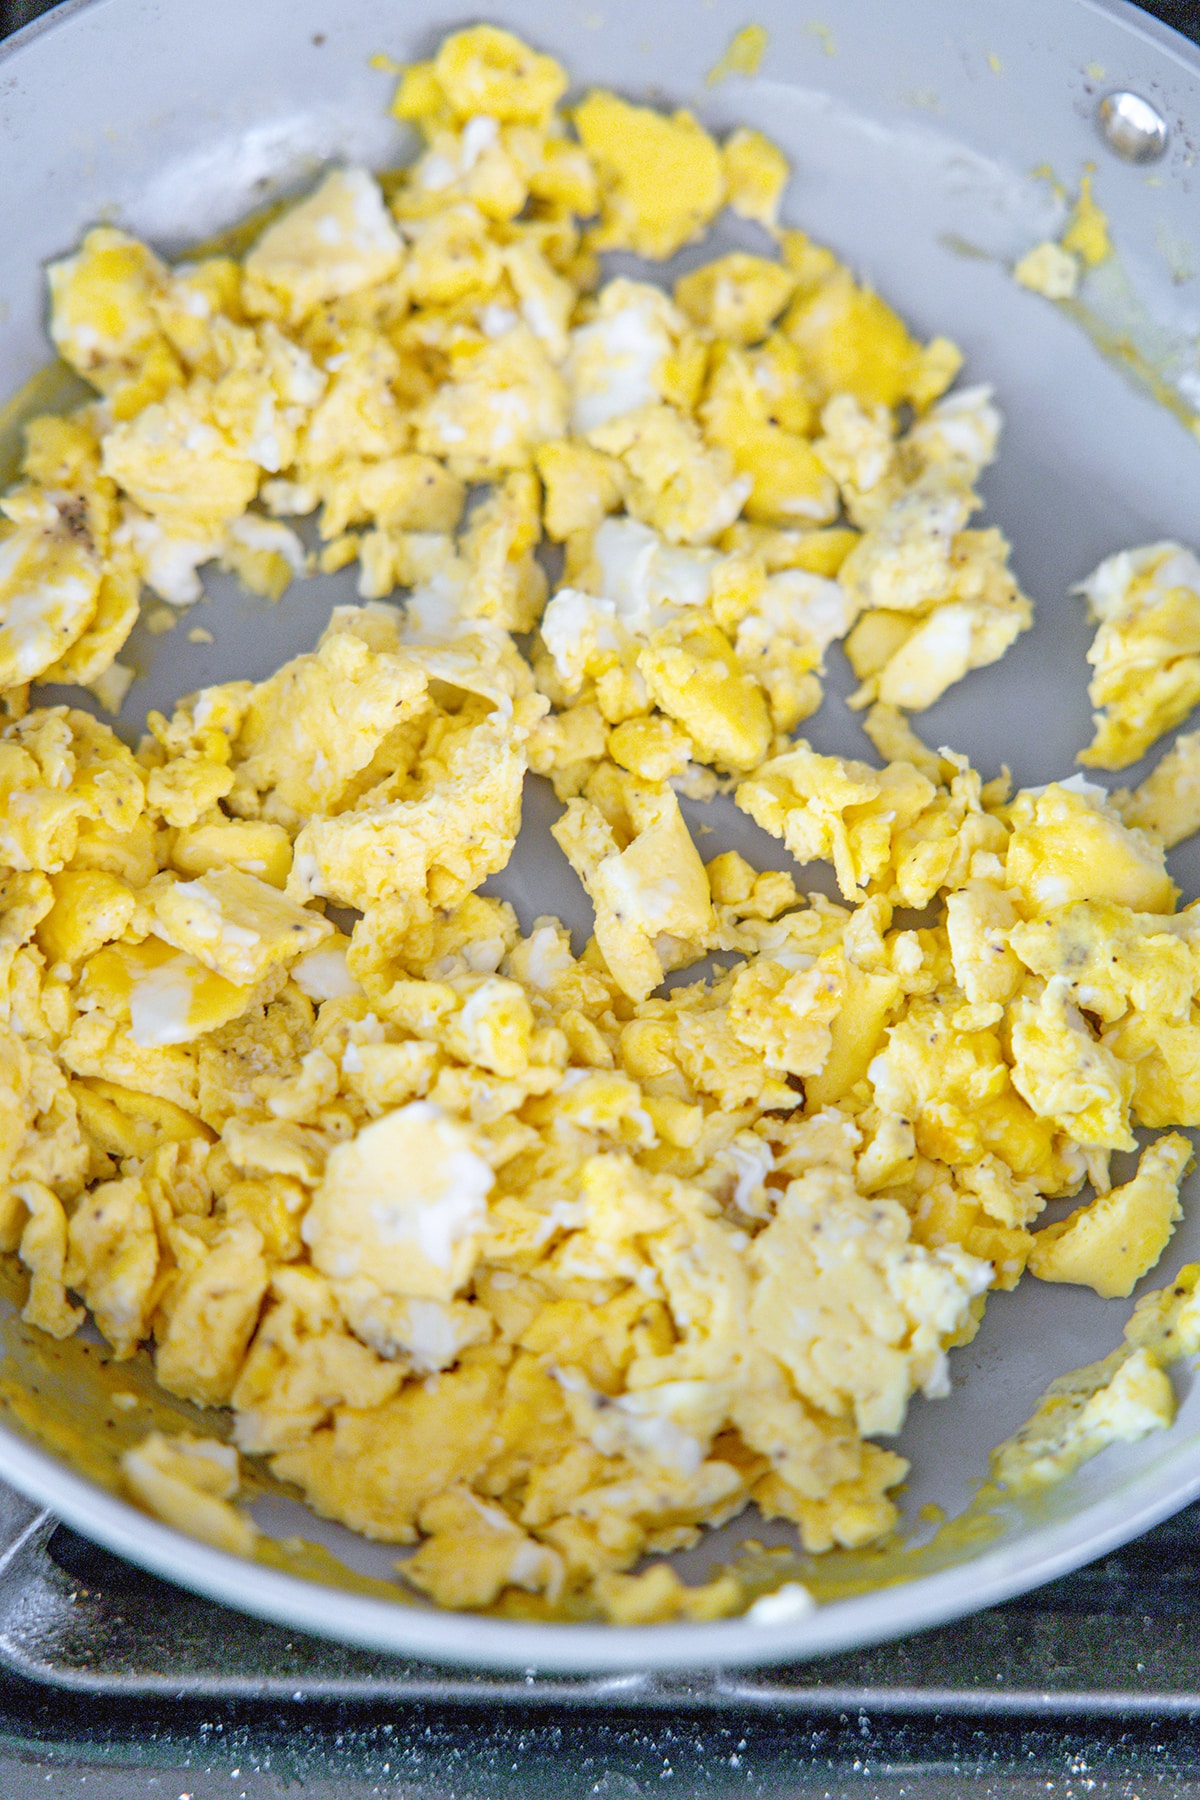 Scrambled eggs in skillet.